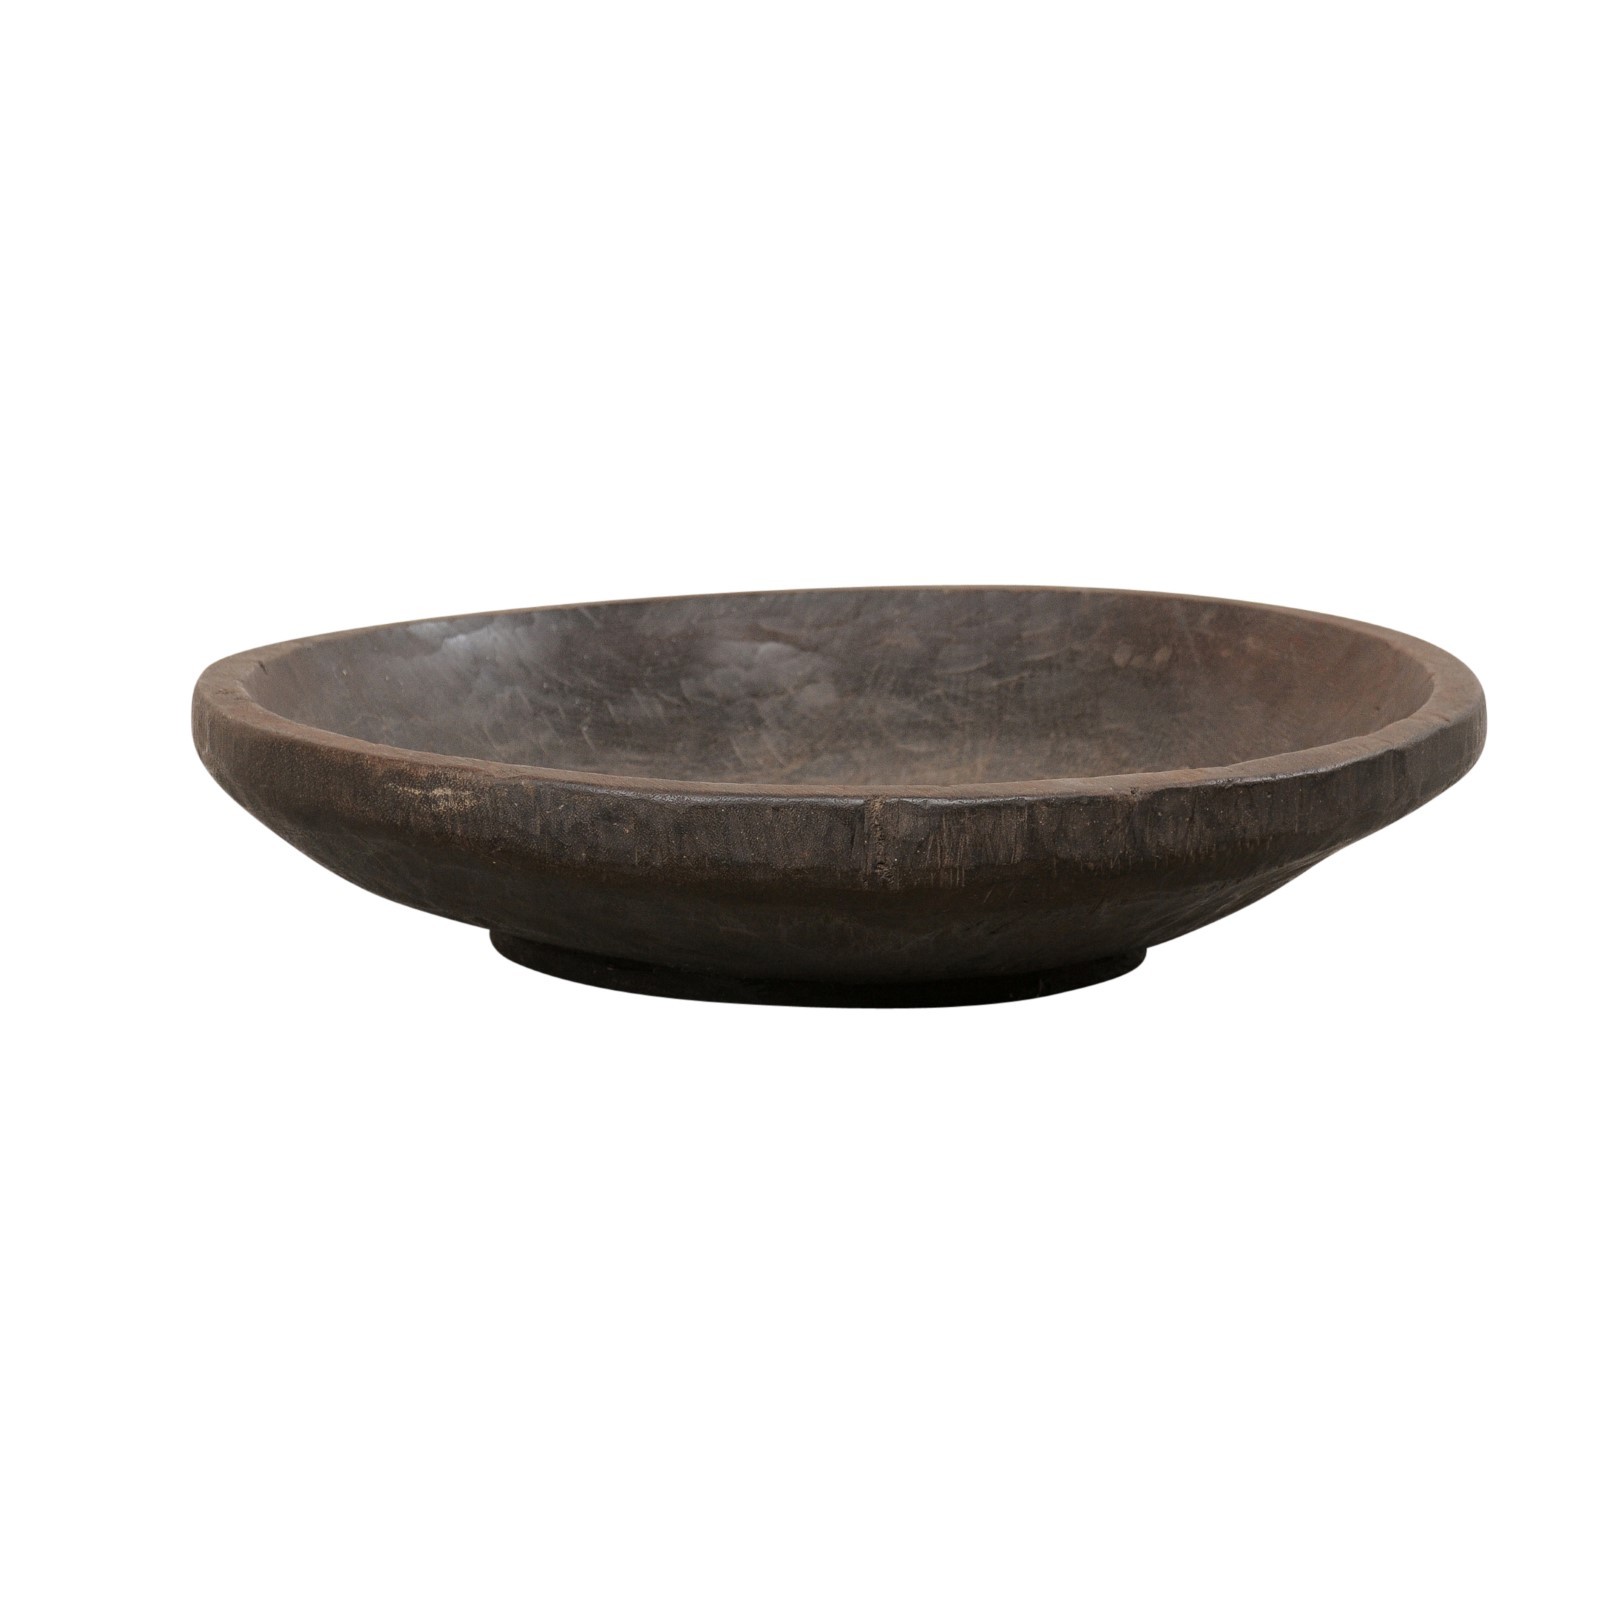 Antique Sumatran Wooden Bowl, 24" Round